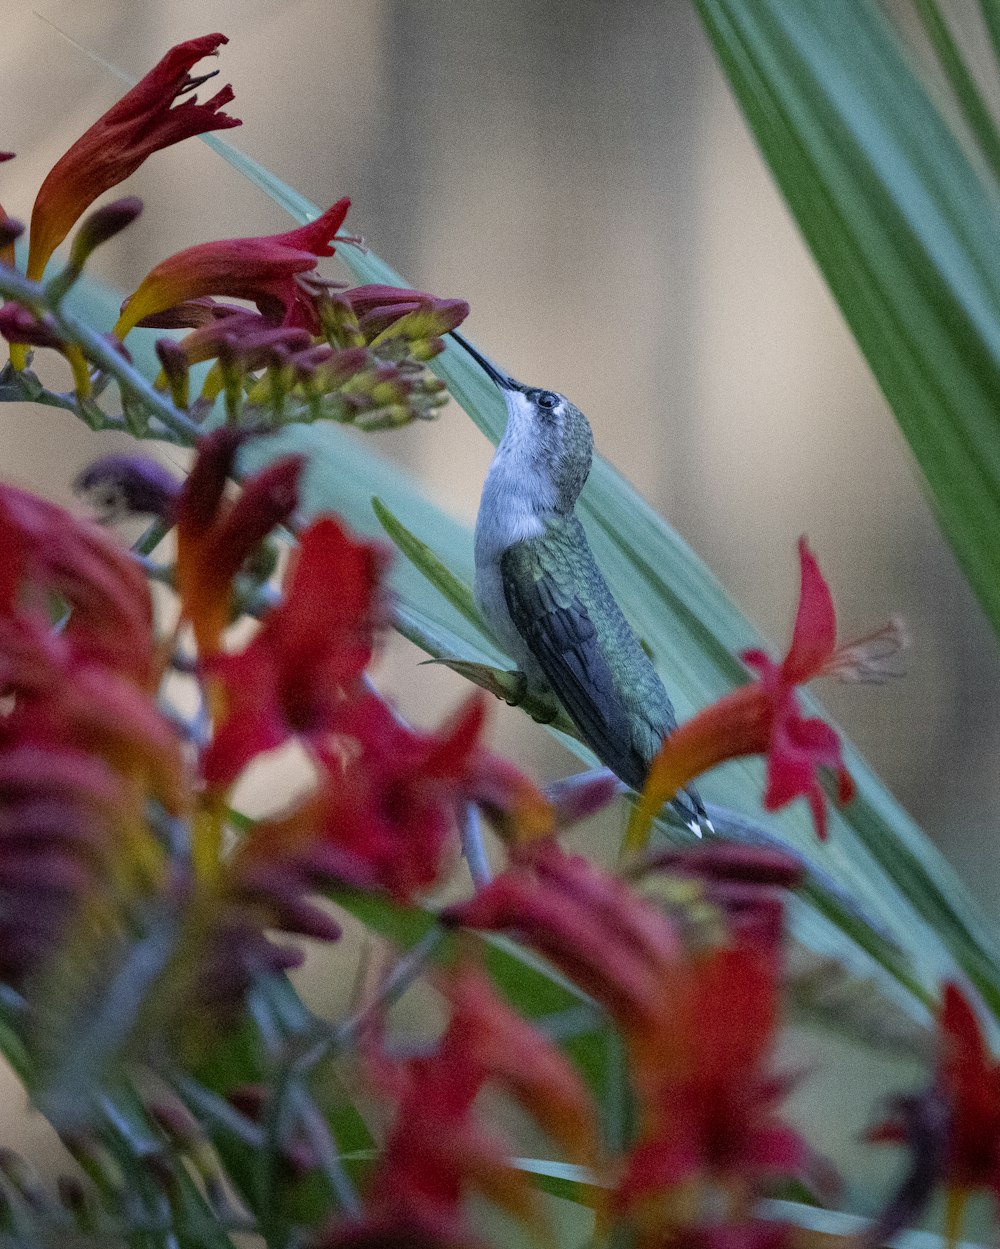 a bird perched on a flower